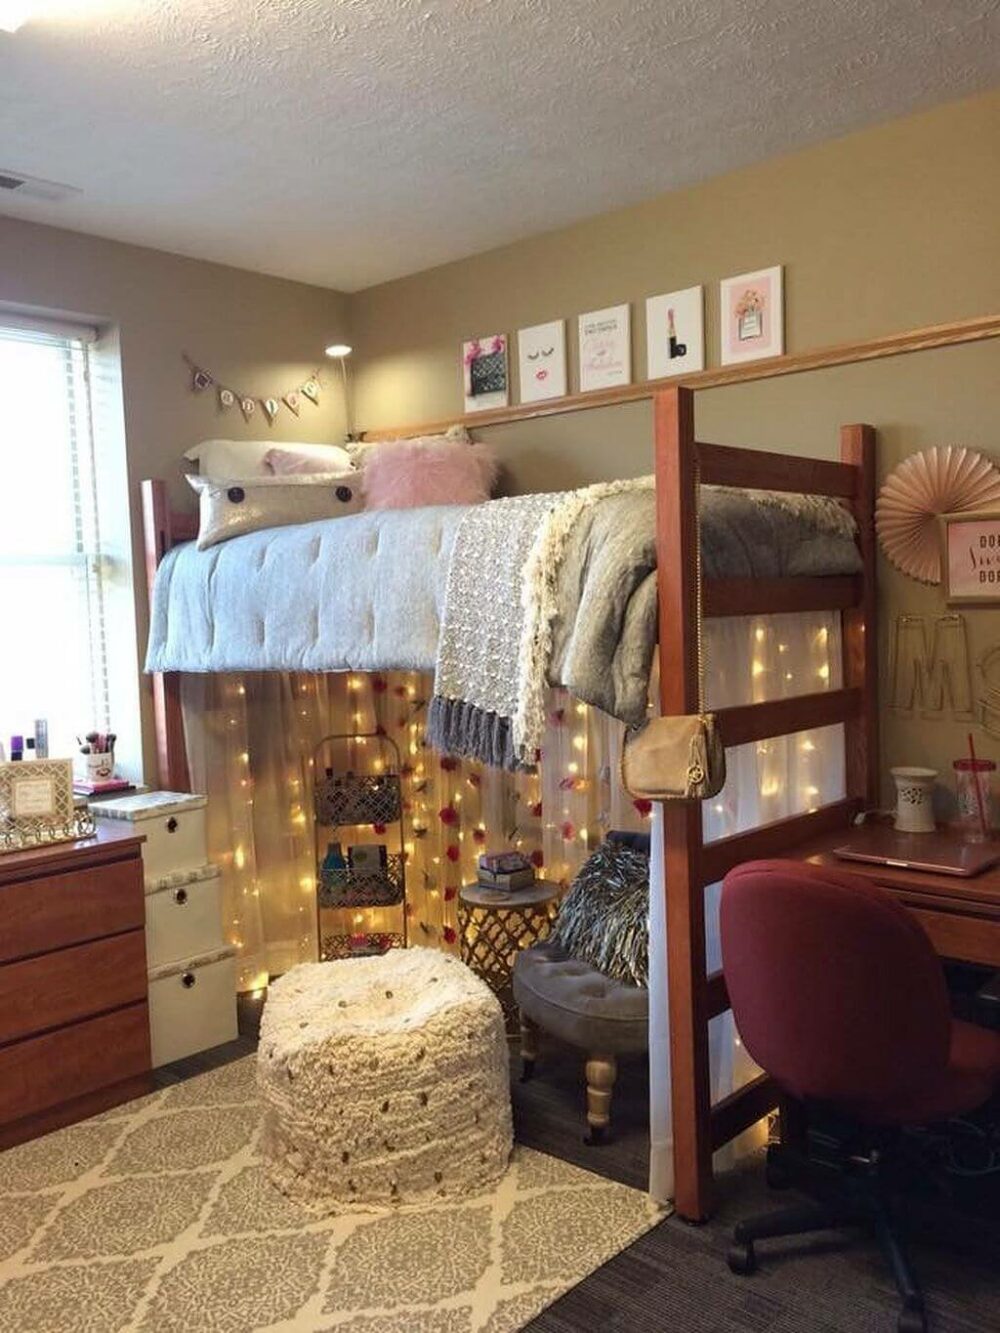 dorm room ideas bunk beds